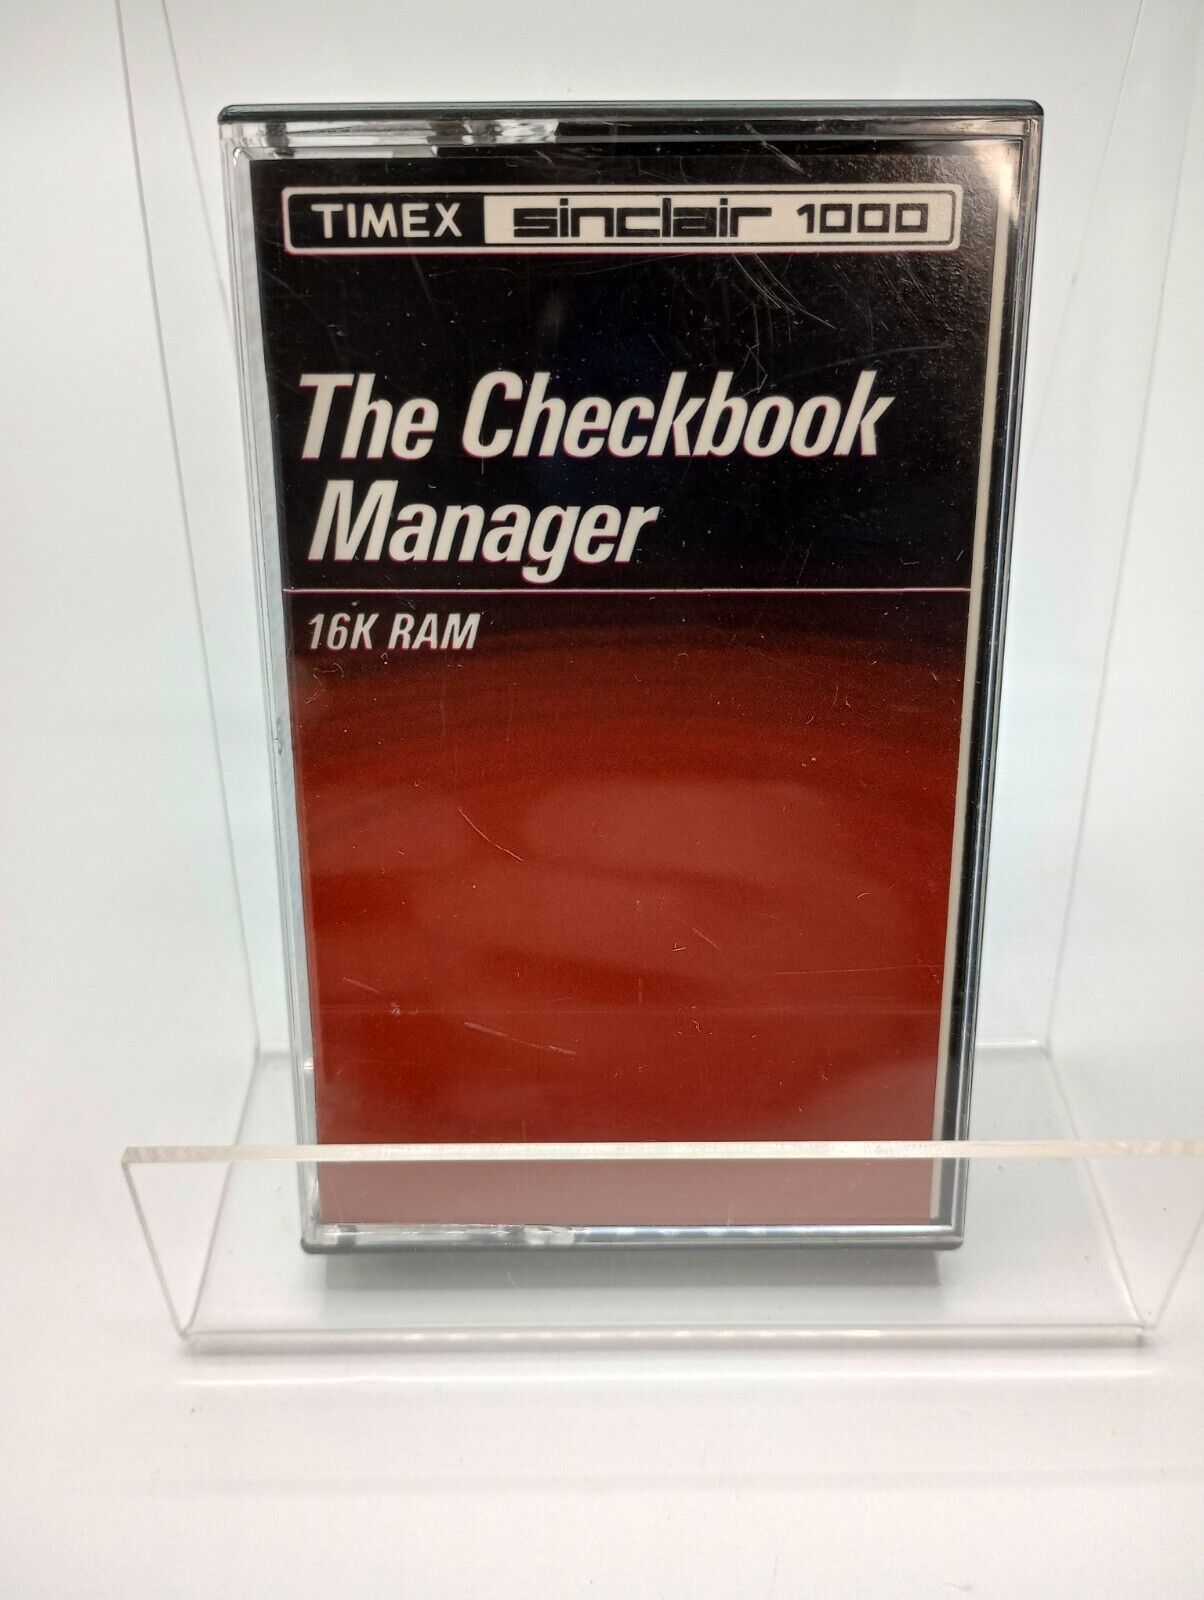 Timex Sinclair 1000 The Checkbook Manager - 16K RAM Program Cassette